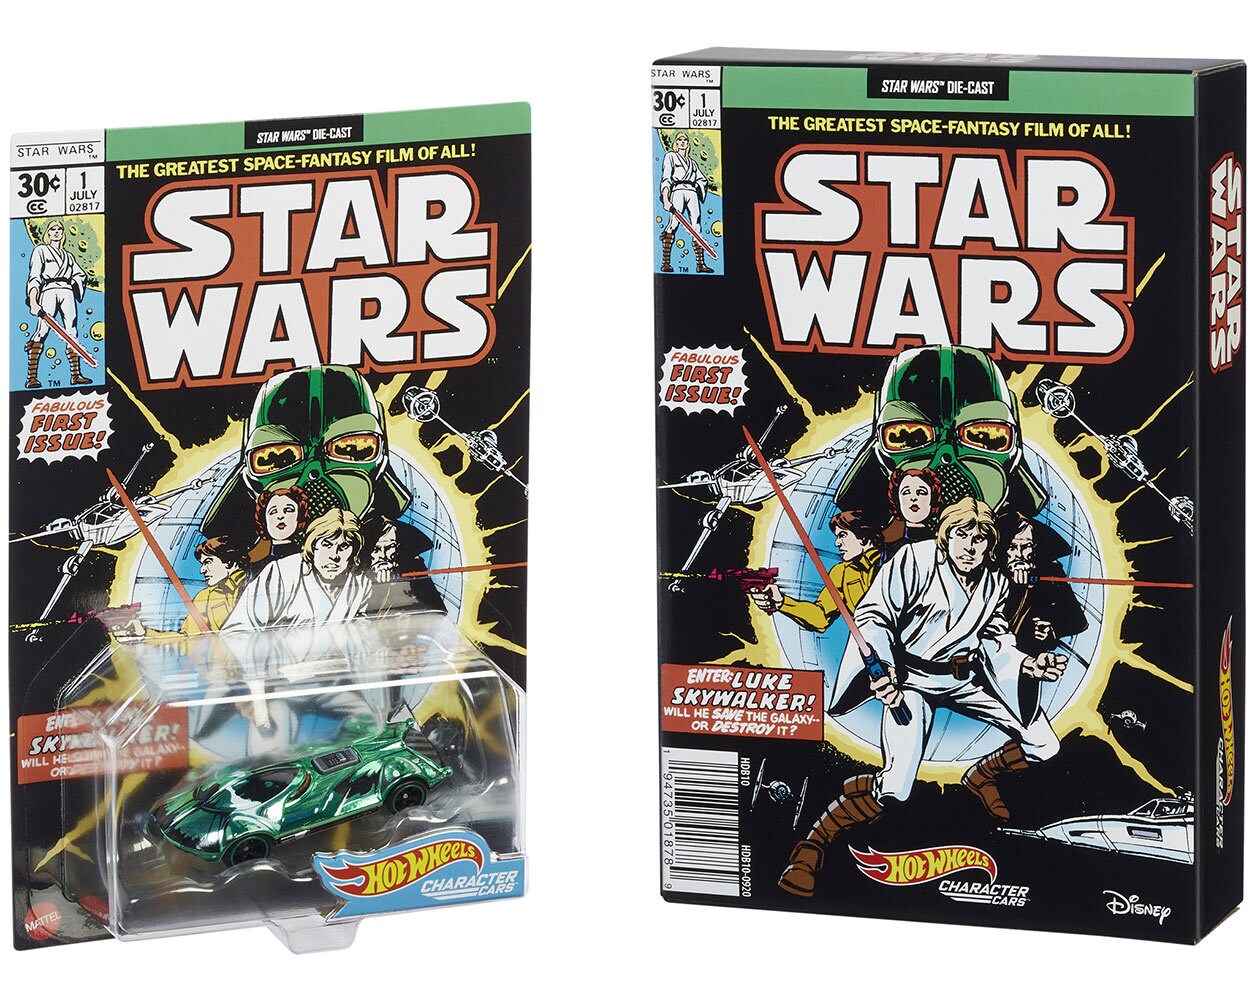 Hot Wheels Star Wars Green Darth Vader Character Car in packaging